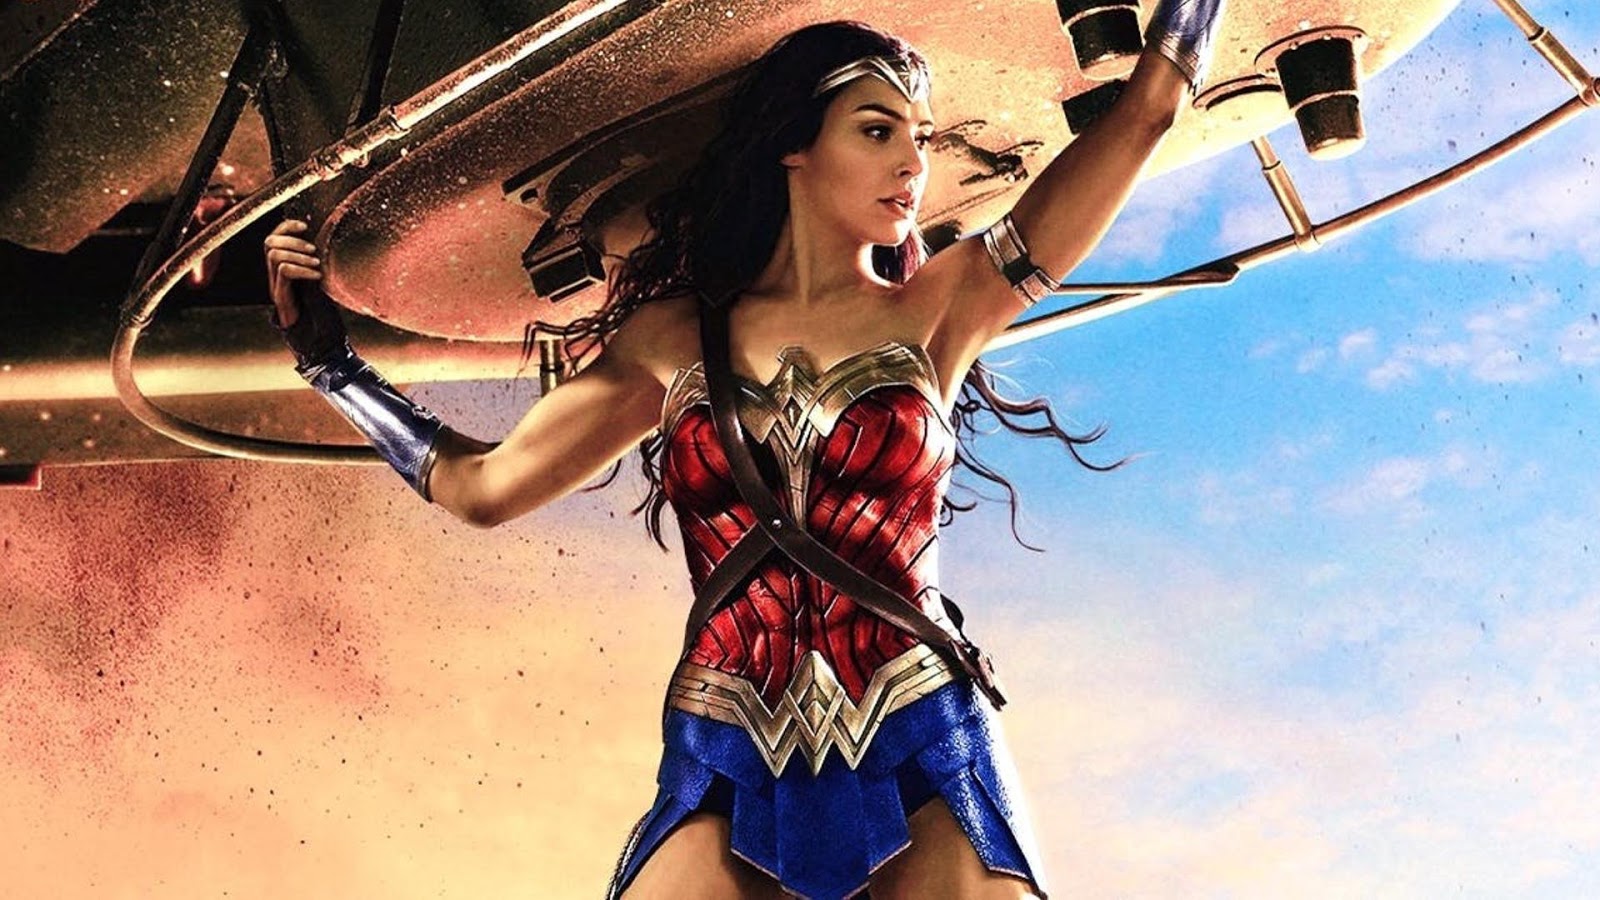 Download Wonder Woman (2017) Full Movie Free 480p, 720p and 1080p in {Hindi}.